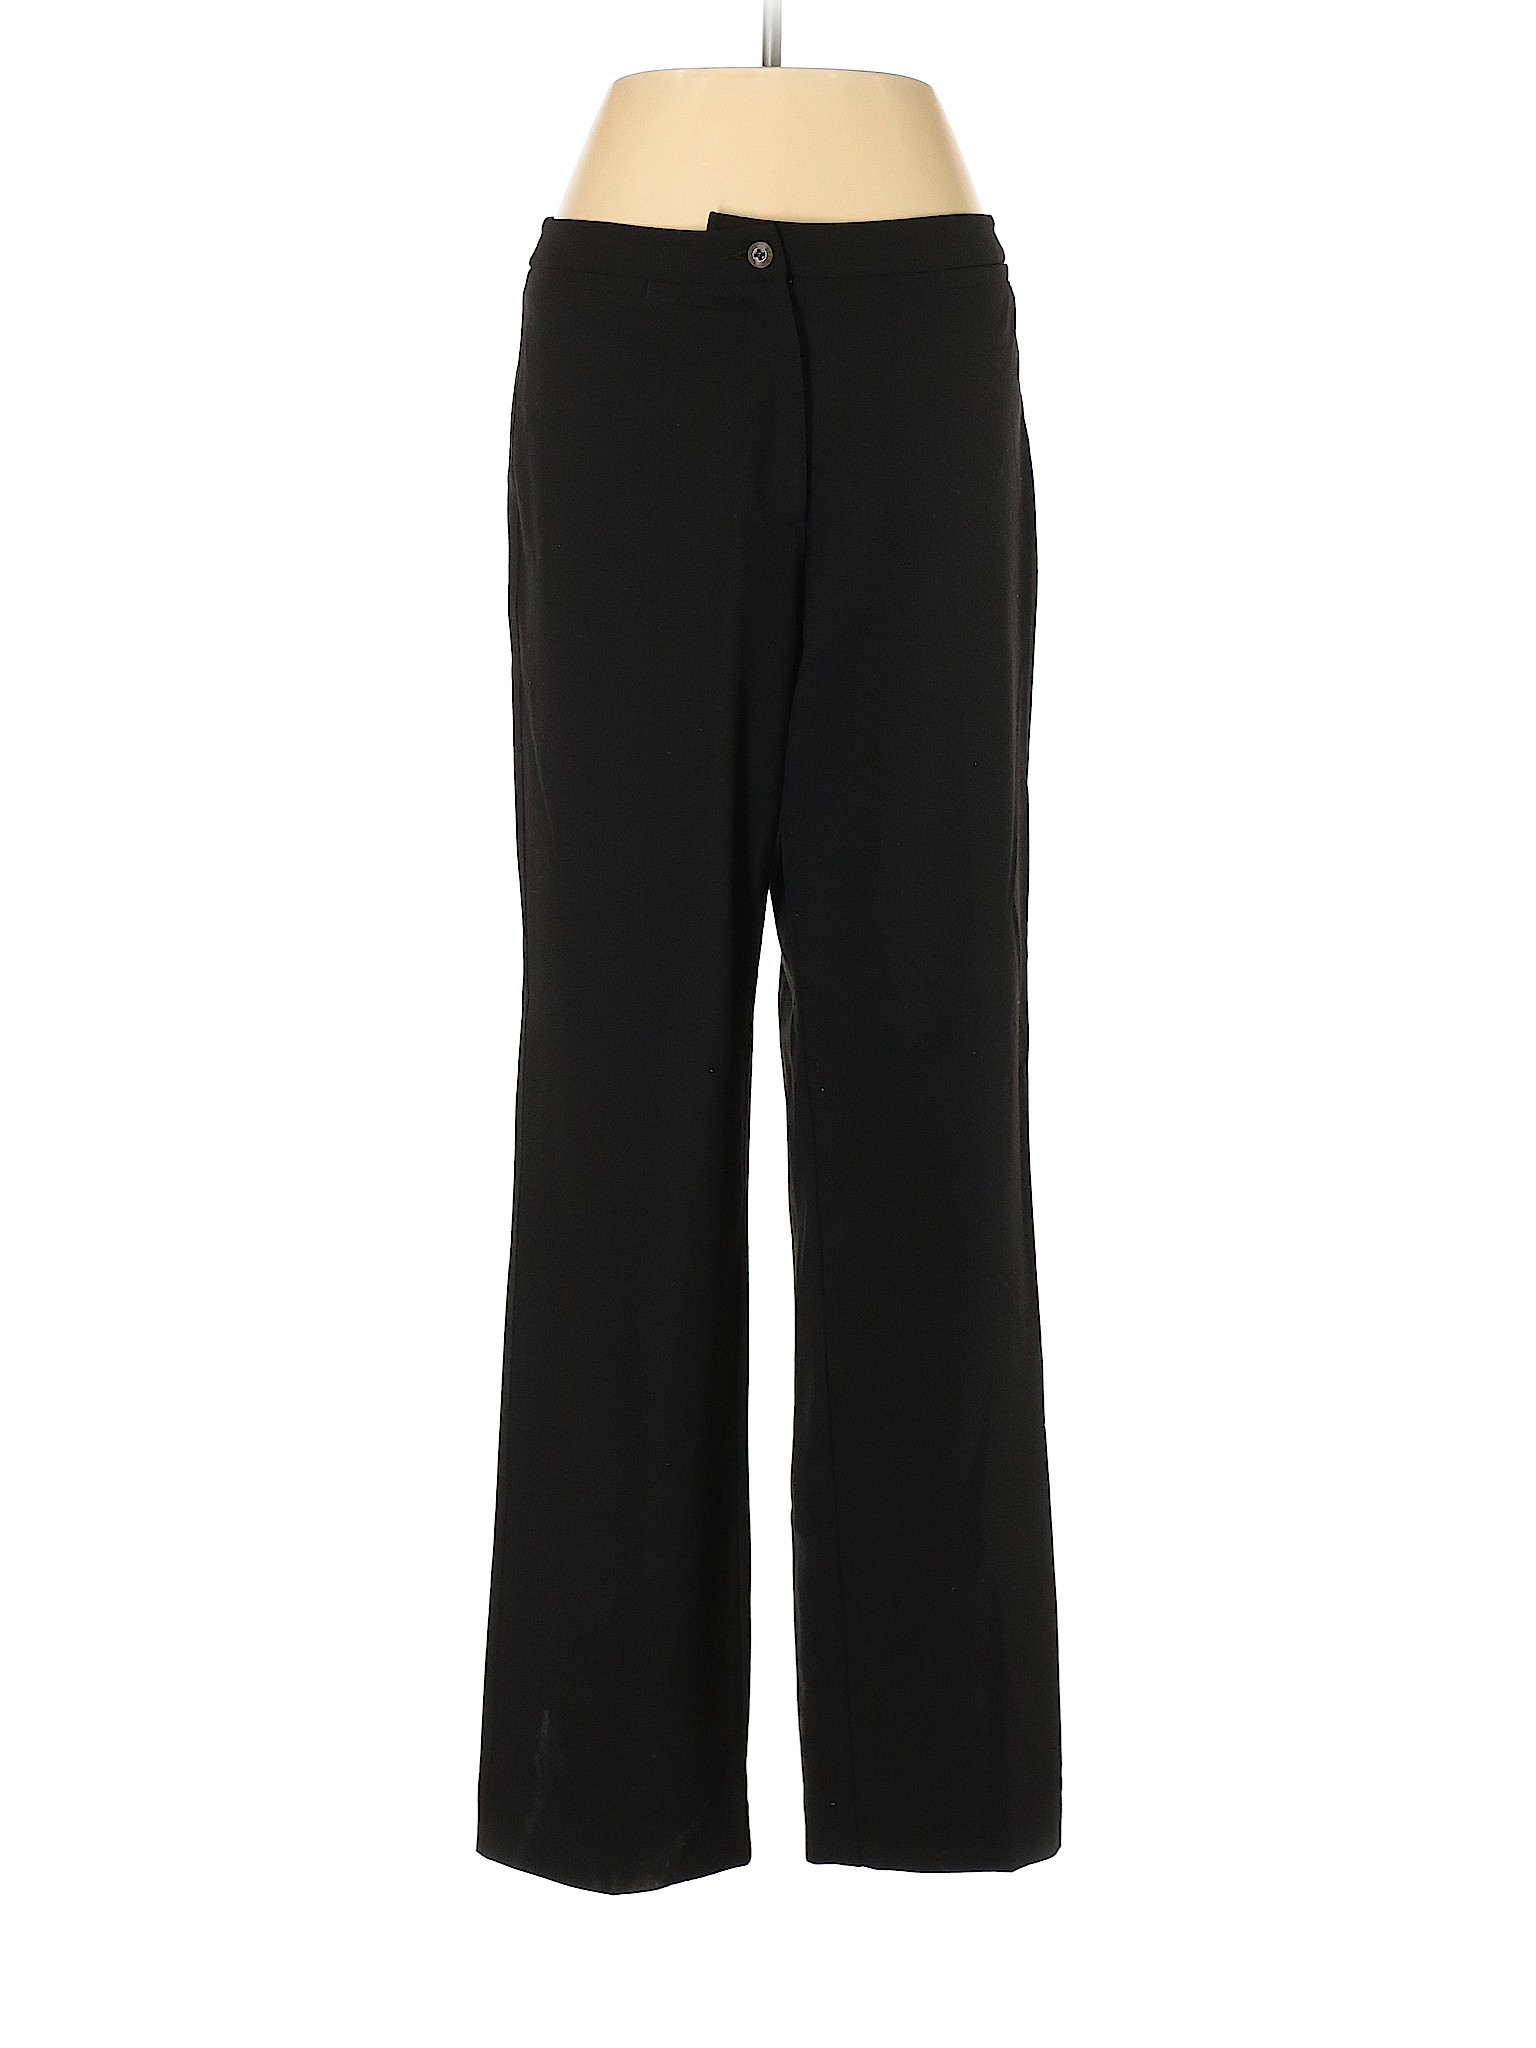 Liz Claiborne Women Black Dress Pants 8 Petites | eBay